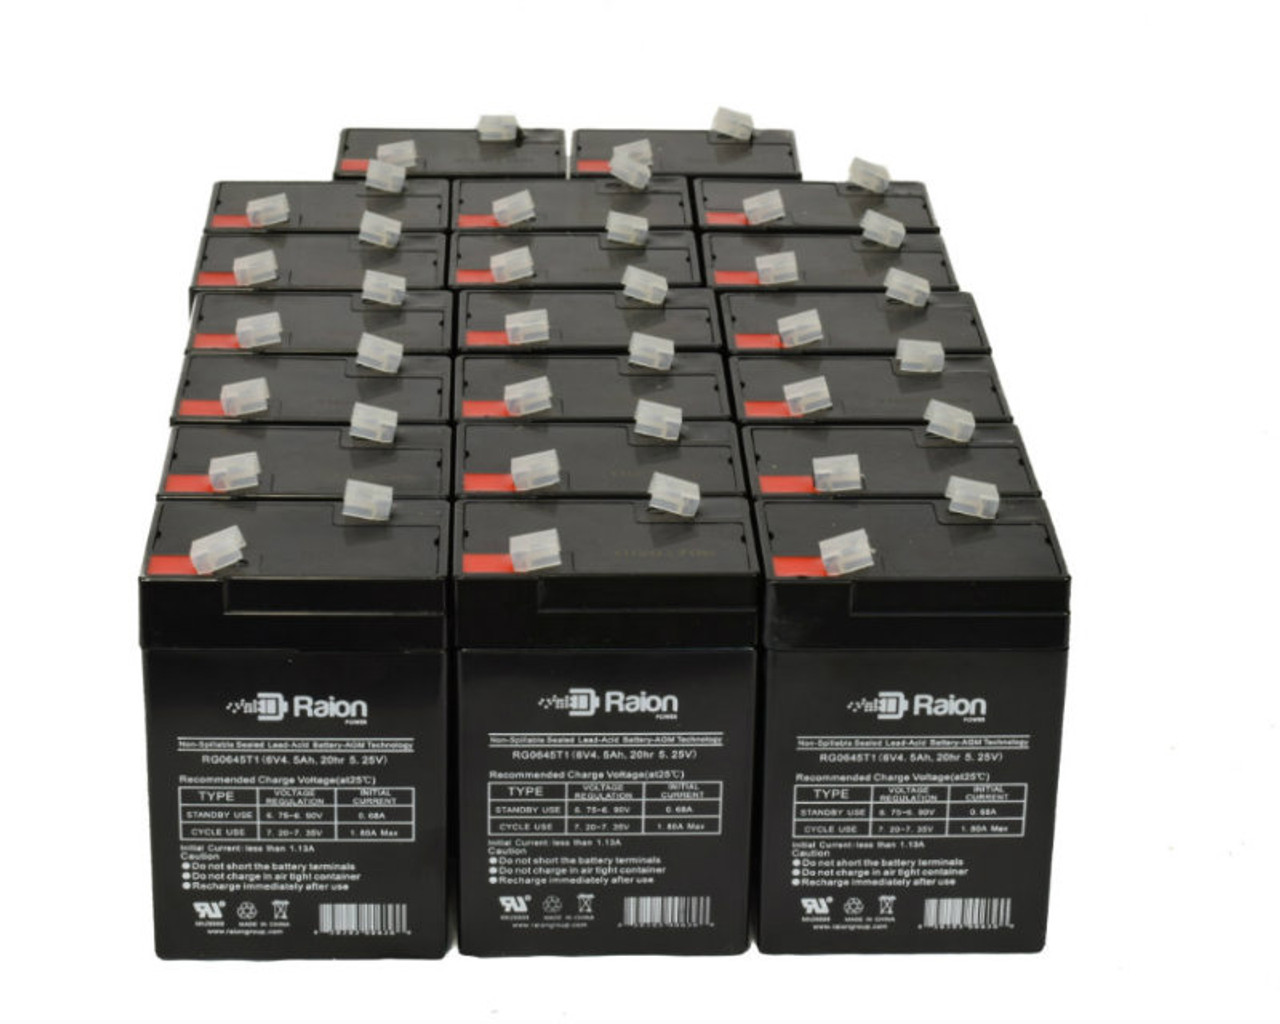 Raion Power 6V 4.5Ah Replacement Emergency Light Battery for Prescolite E8191-4000 - 20 Pack